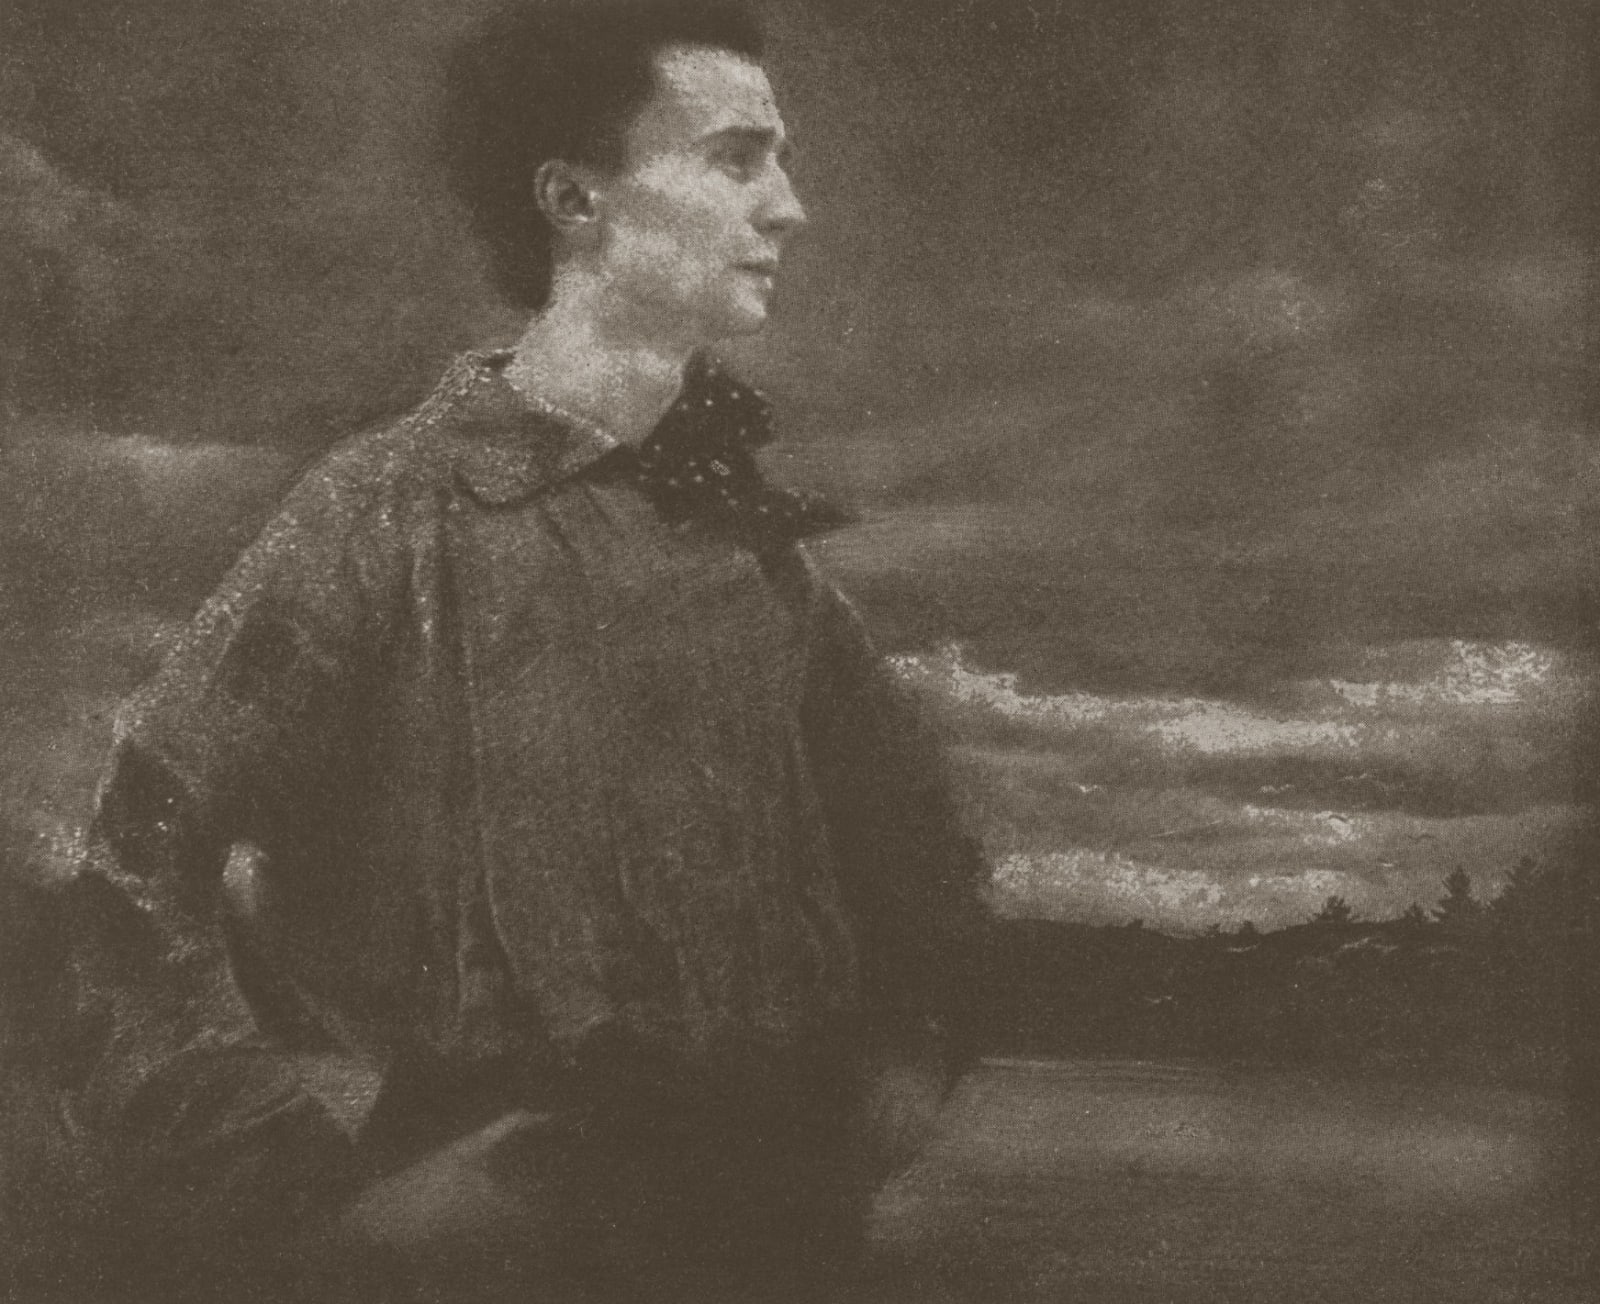 Edward Steichen, Portrait of a Young Man (Self-Portrait), 1905